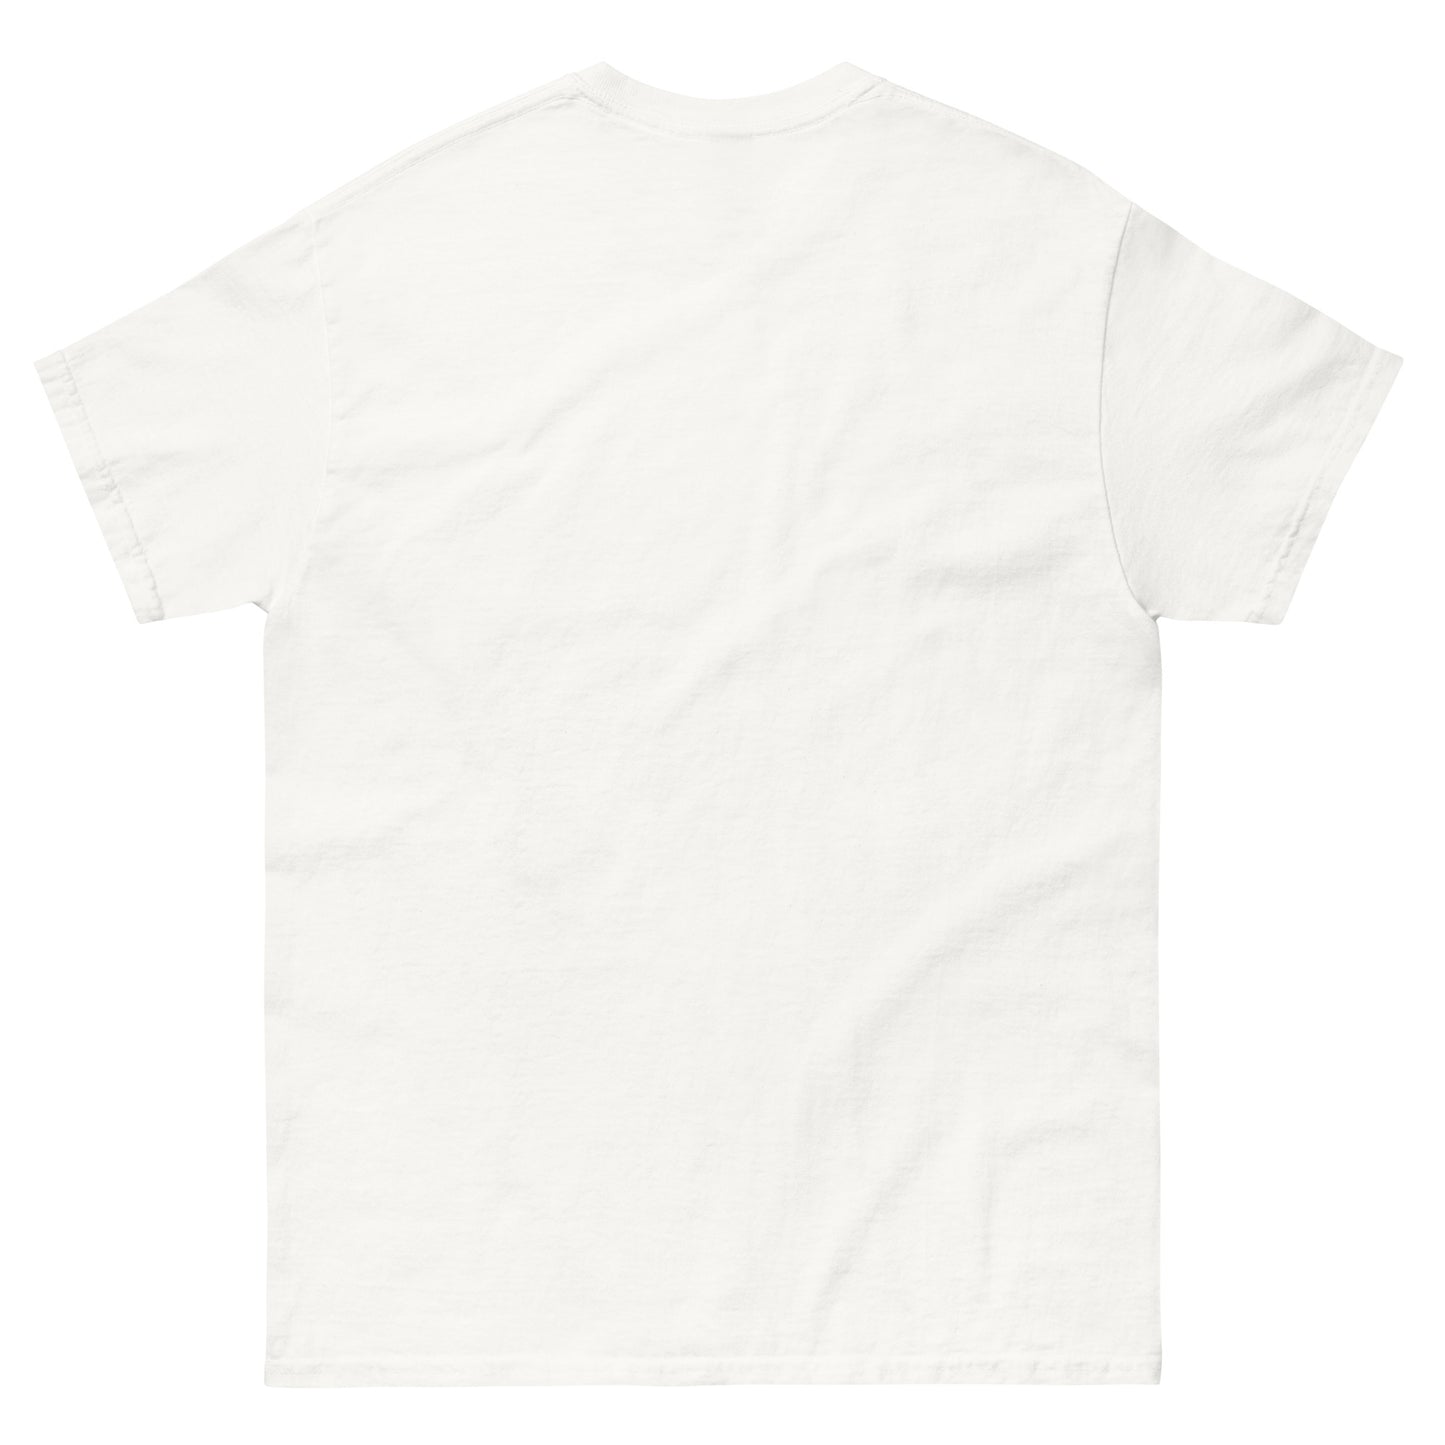 Vintage & Supplies T-Shirt White